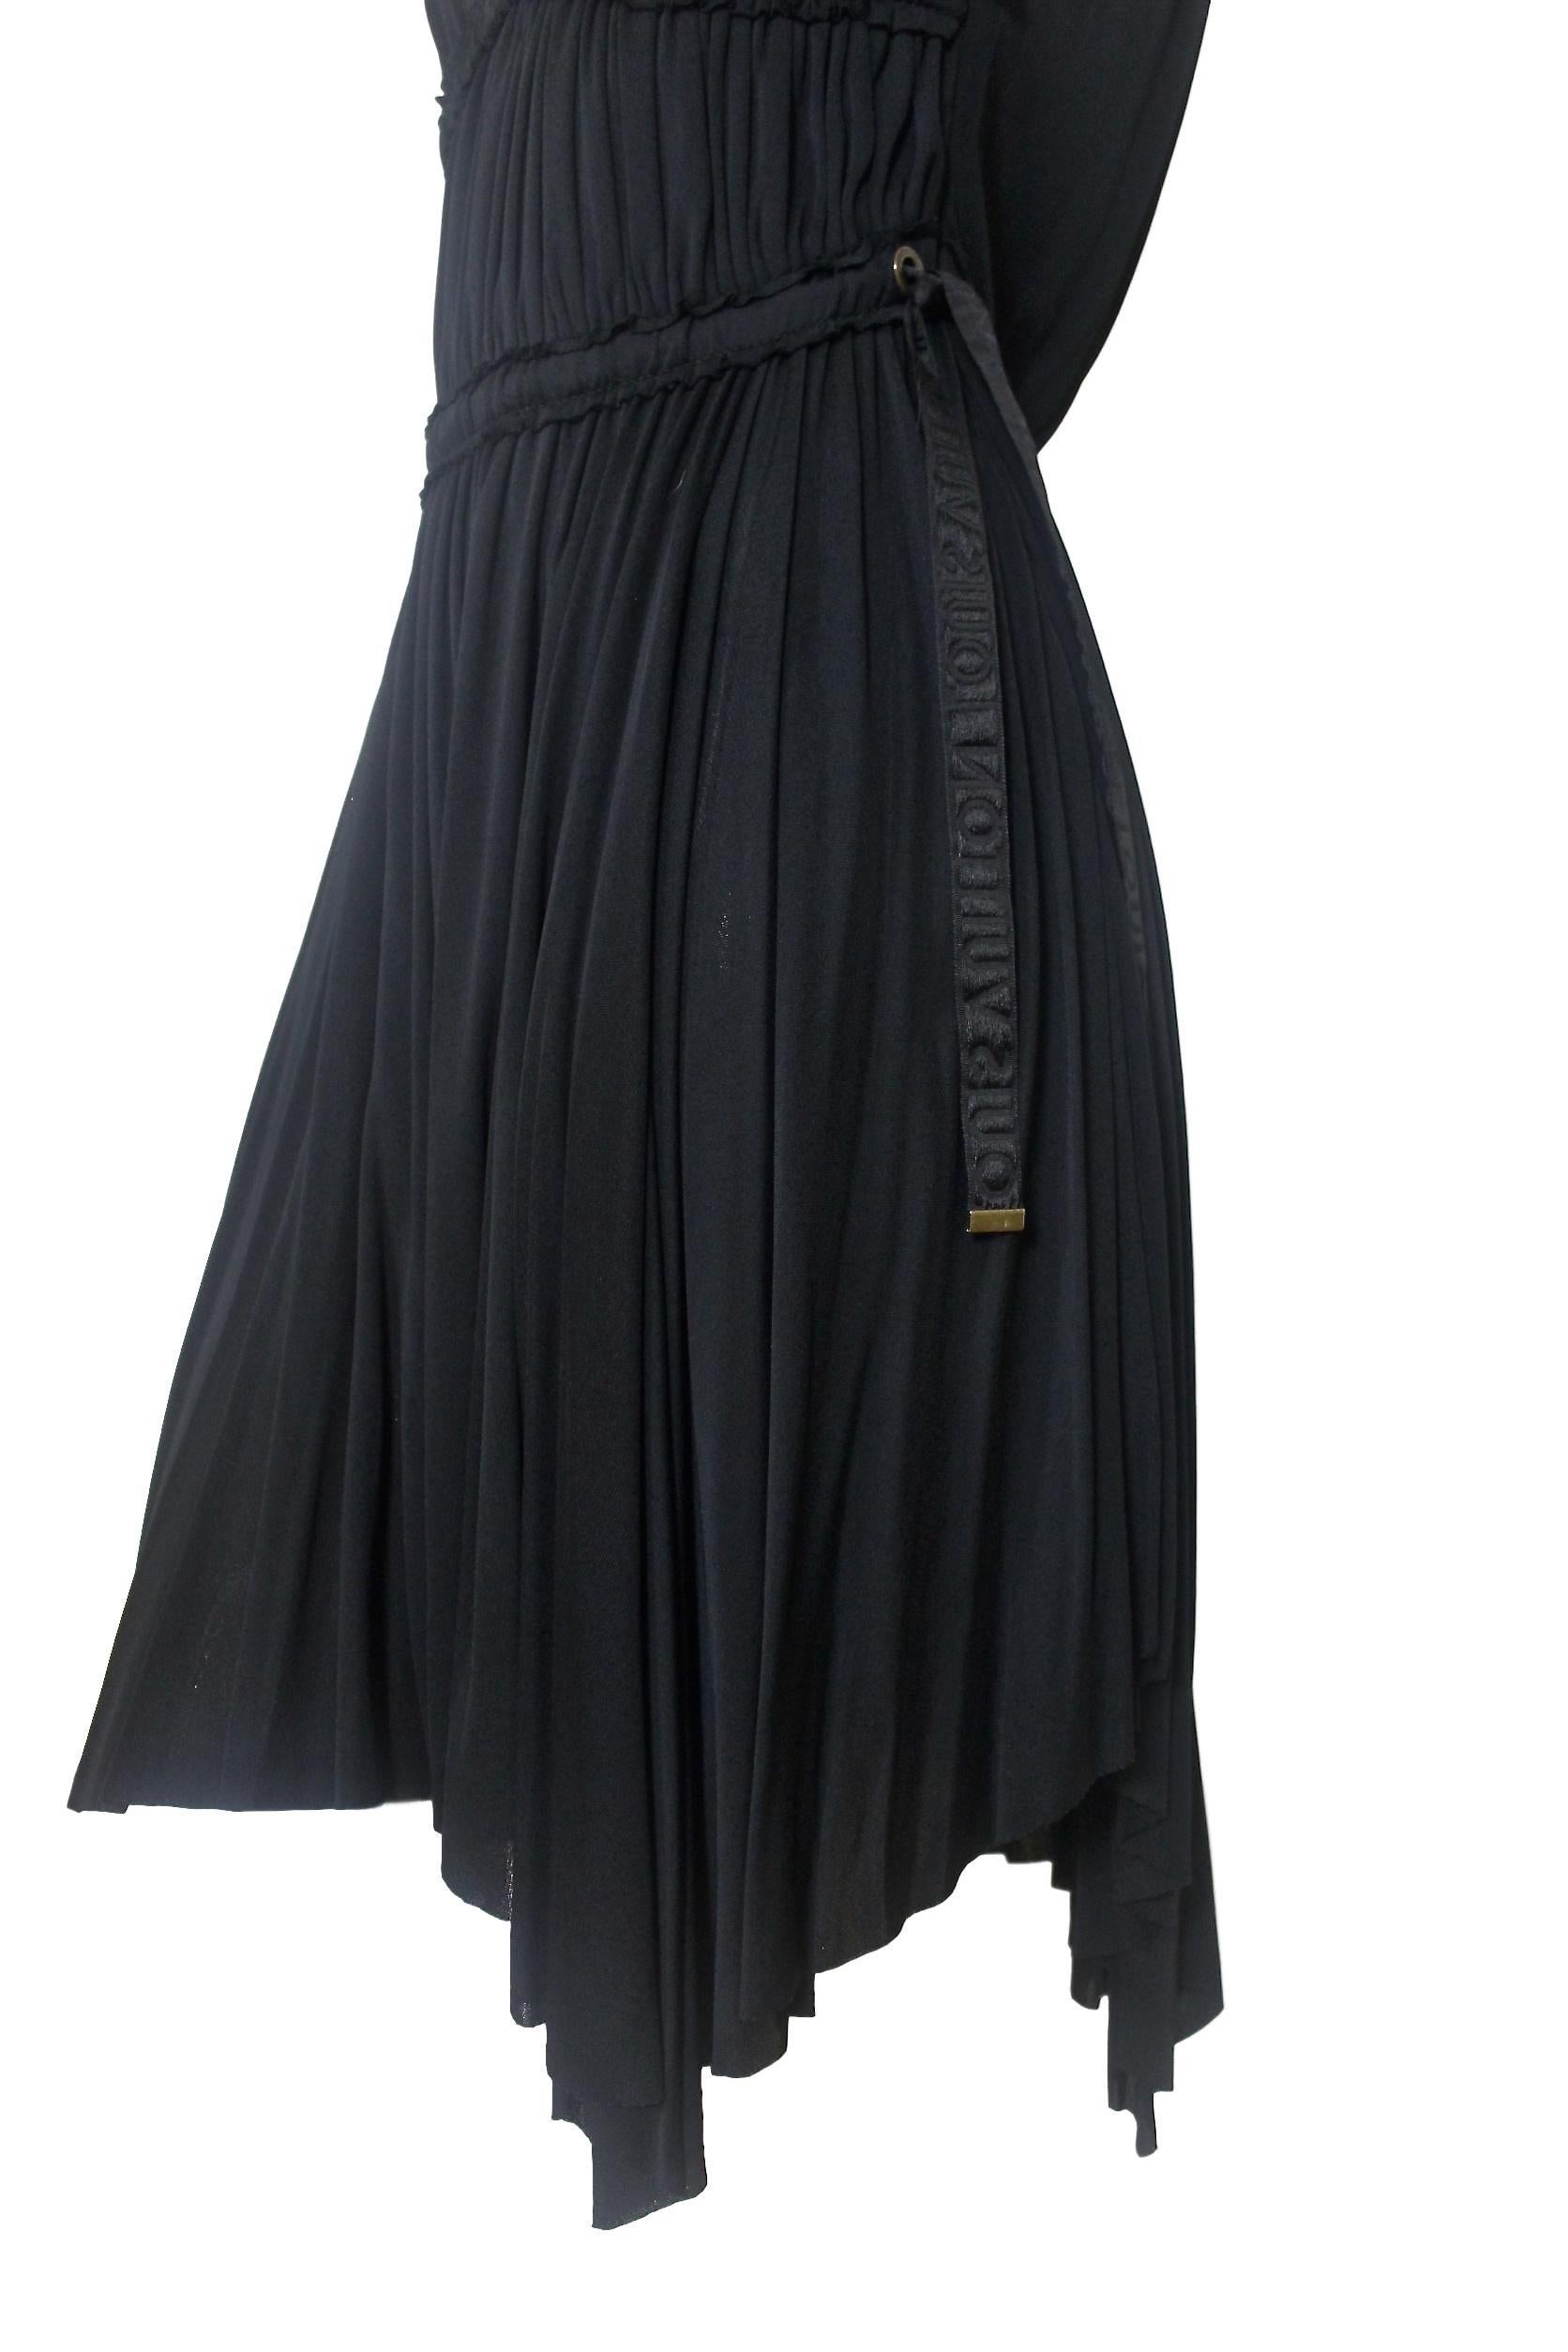 Louis Vuitton Grecian Style Dress For Sale 1